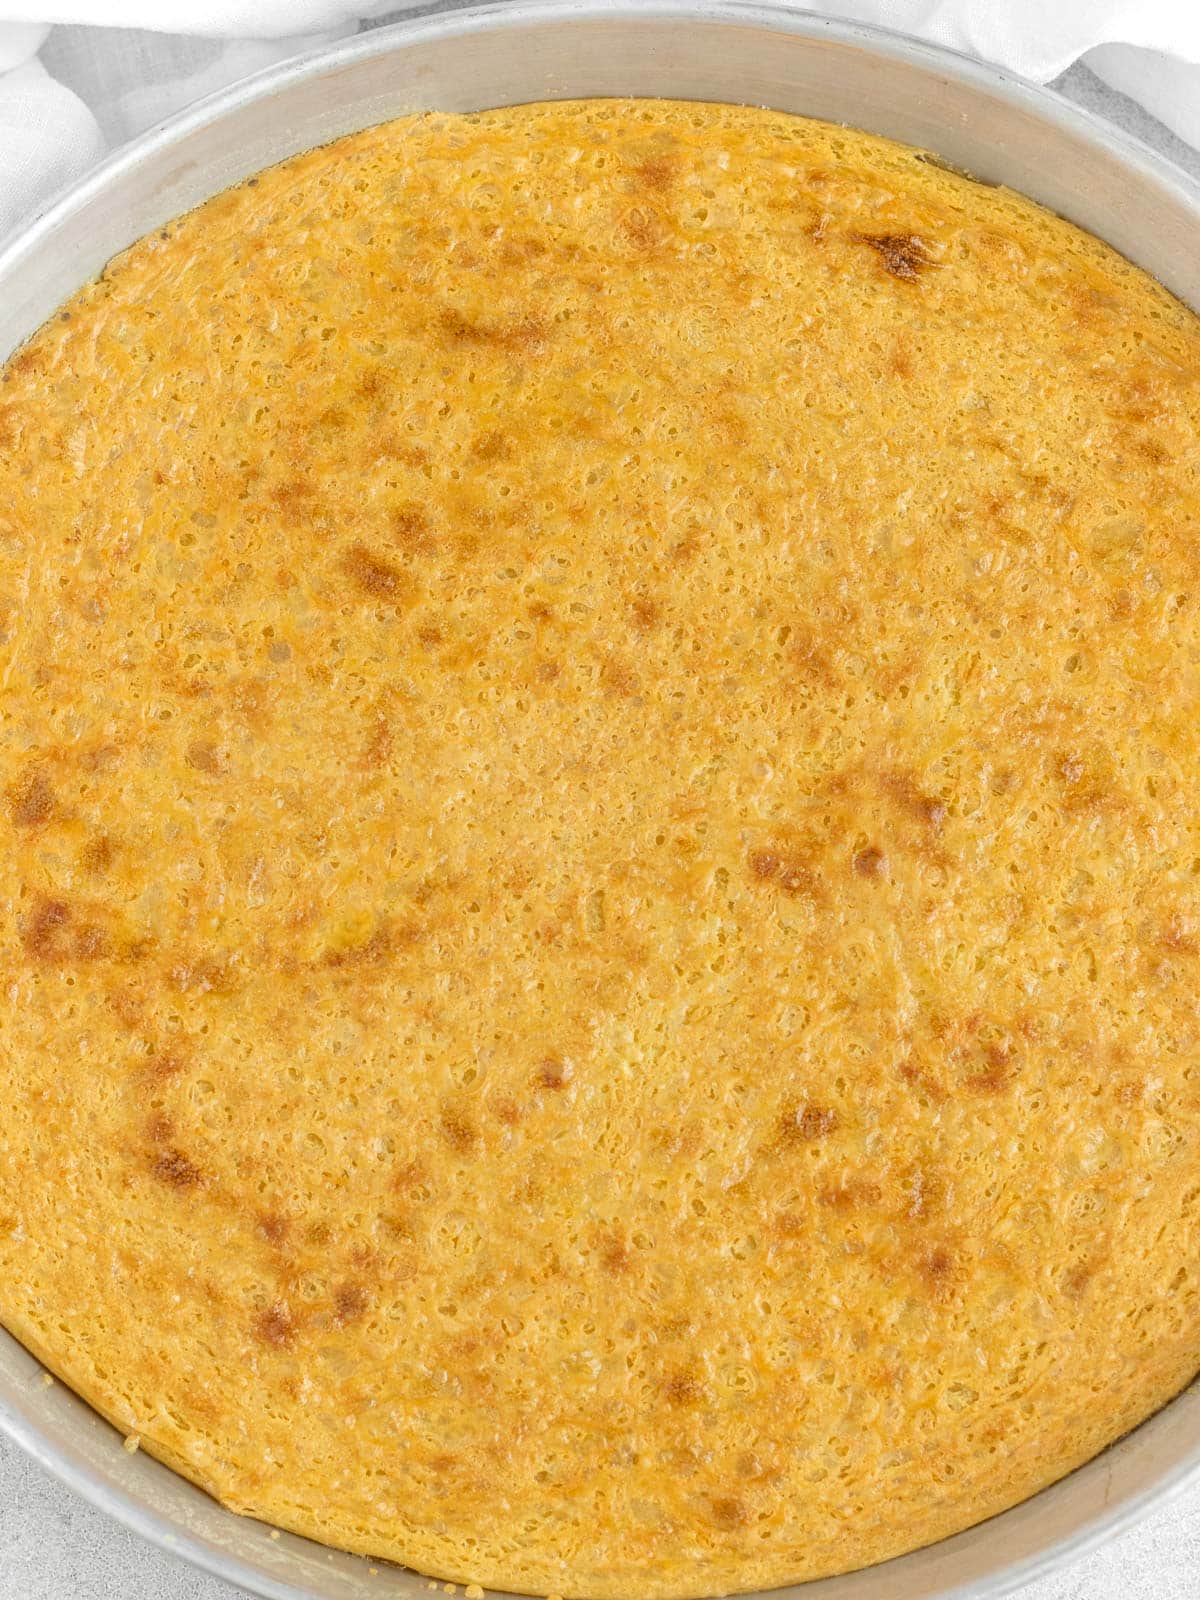 farinata or socca in a baking tray